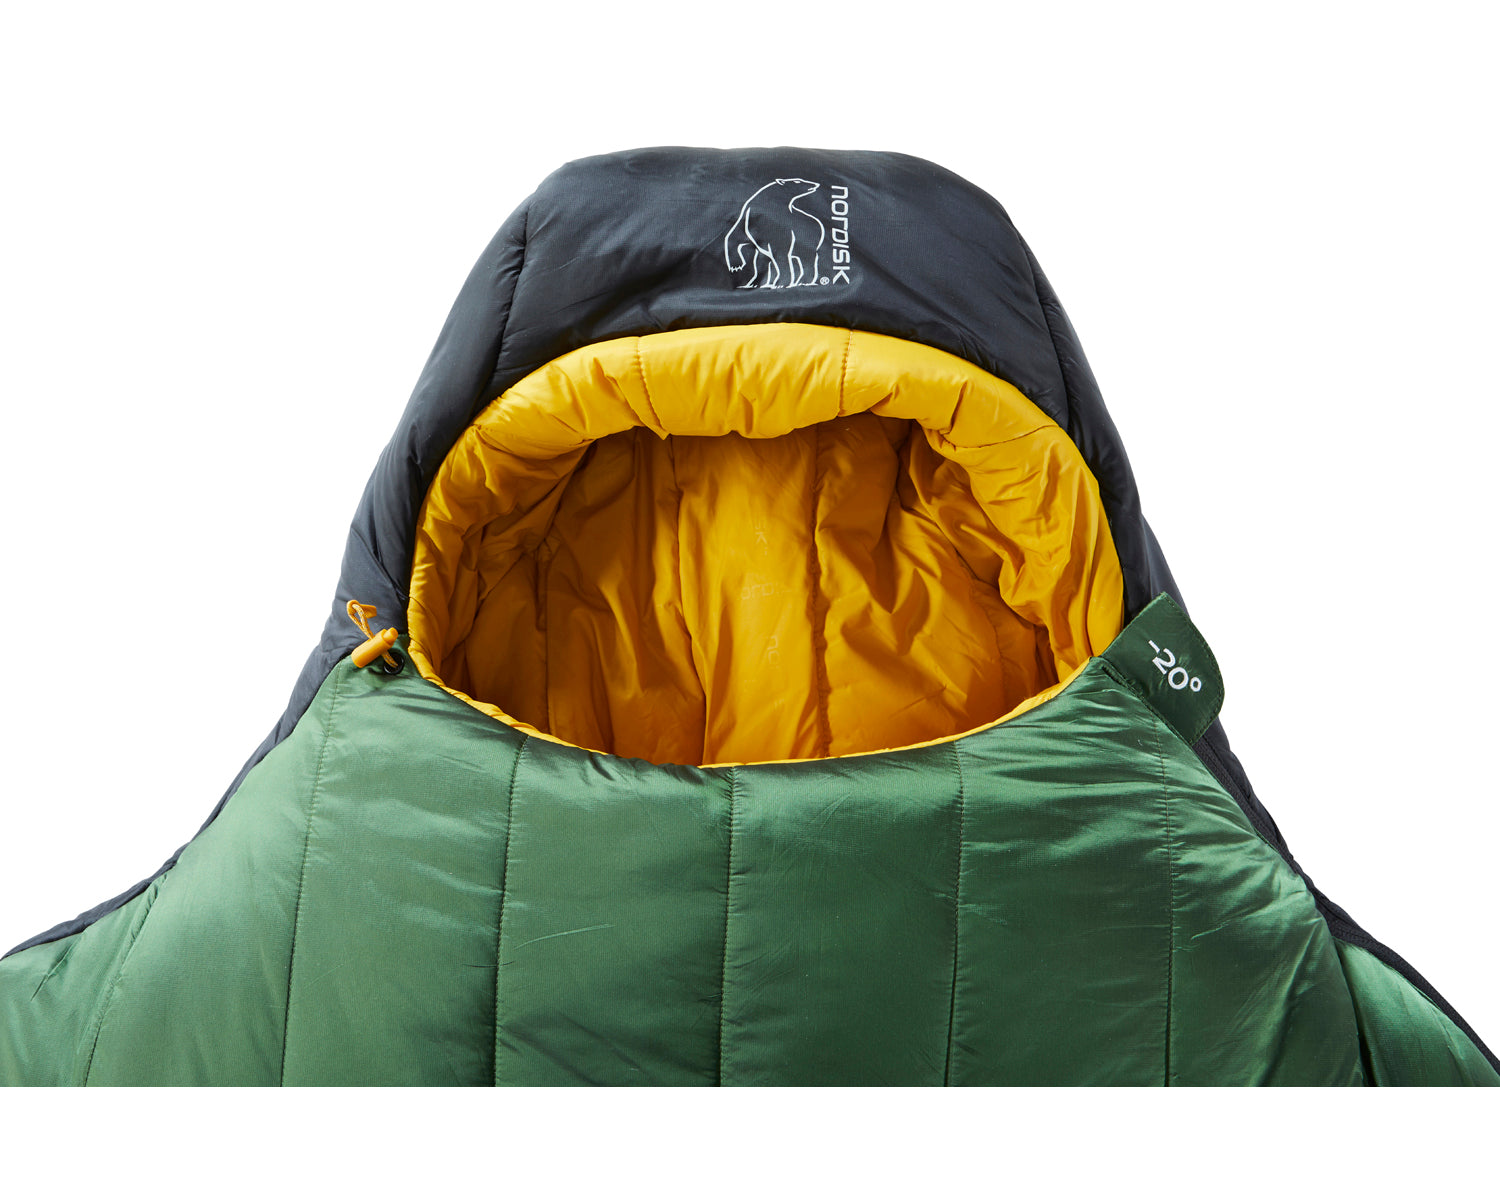 Gormsson -20° Mummy sleeping bag - Artichoke Green/Mustard Yellow/Black